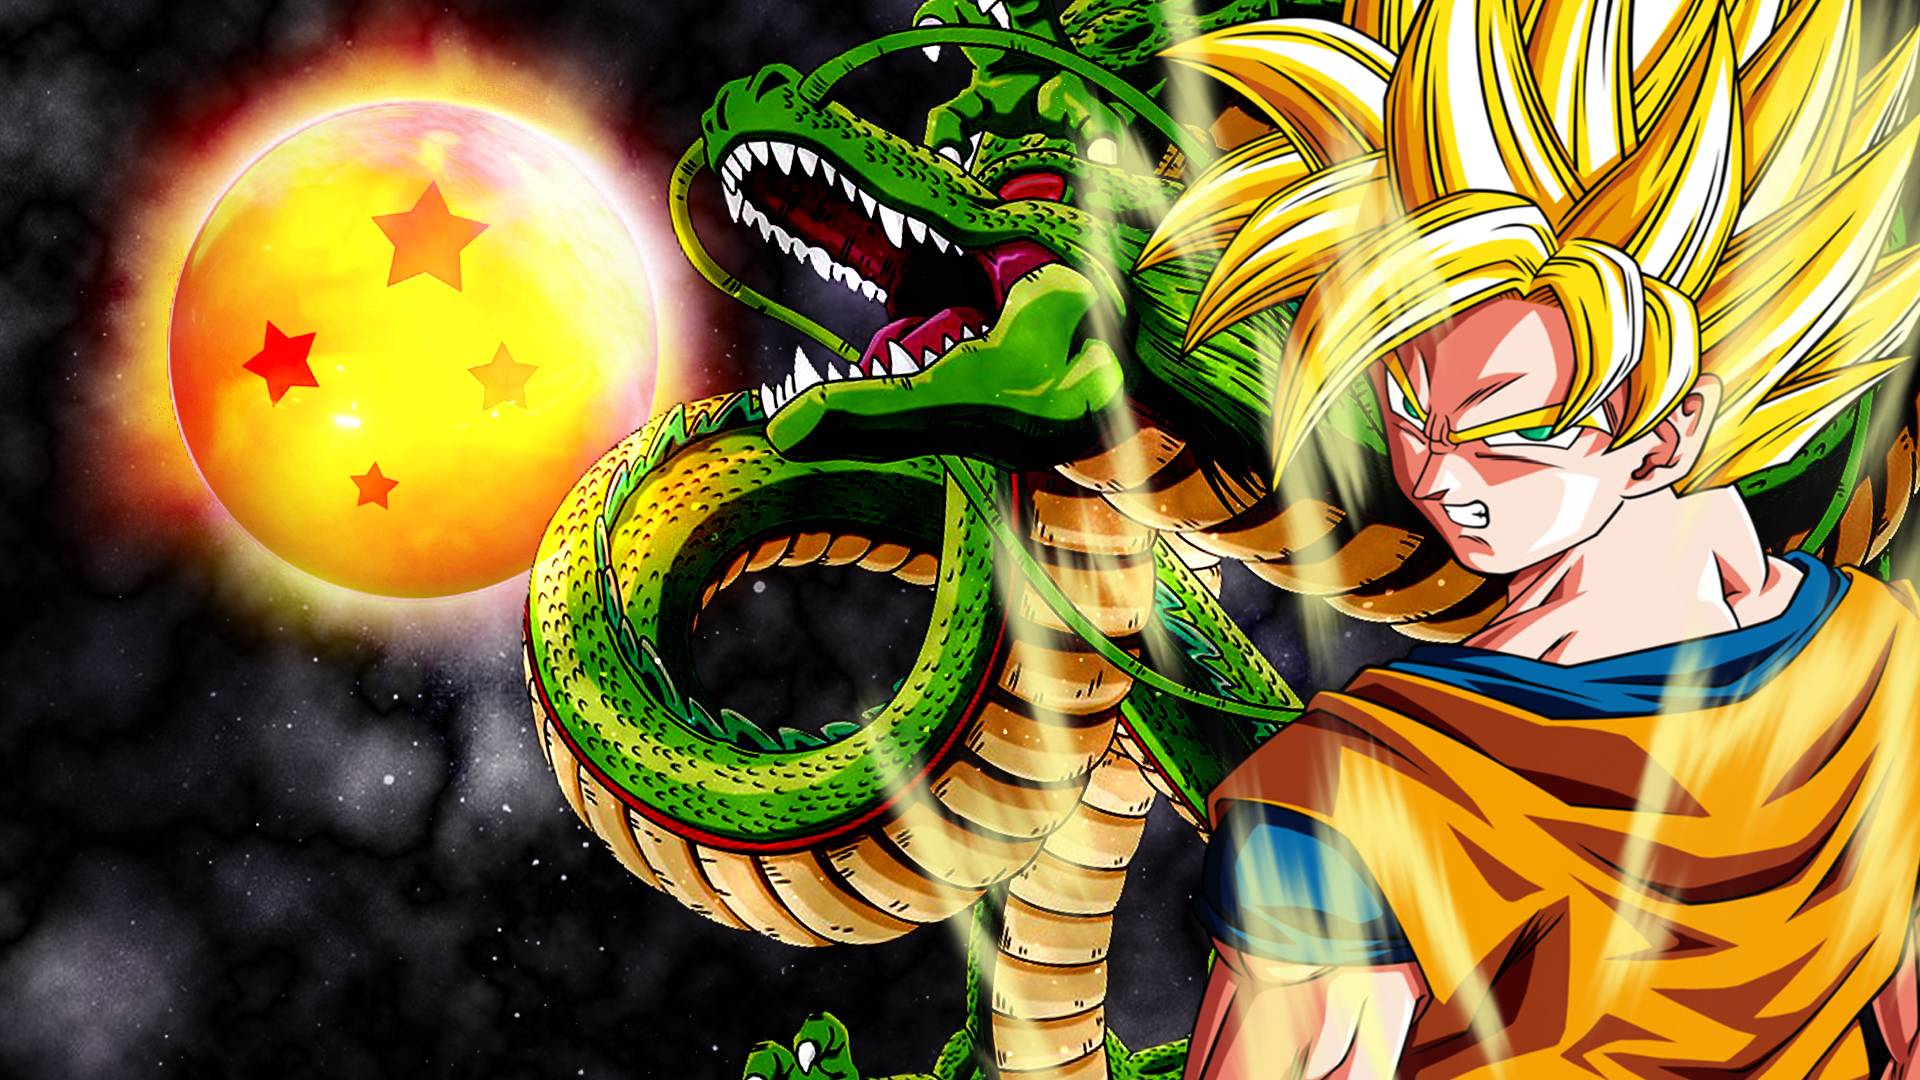 Goku Wallpaper HD